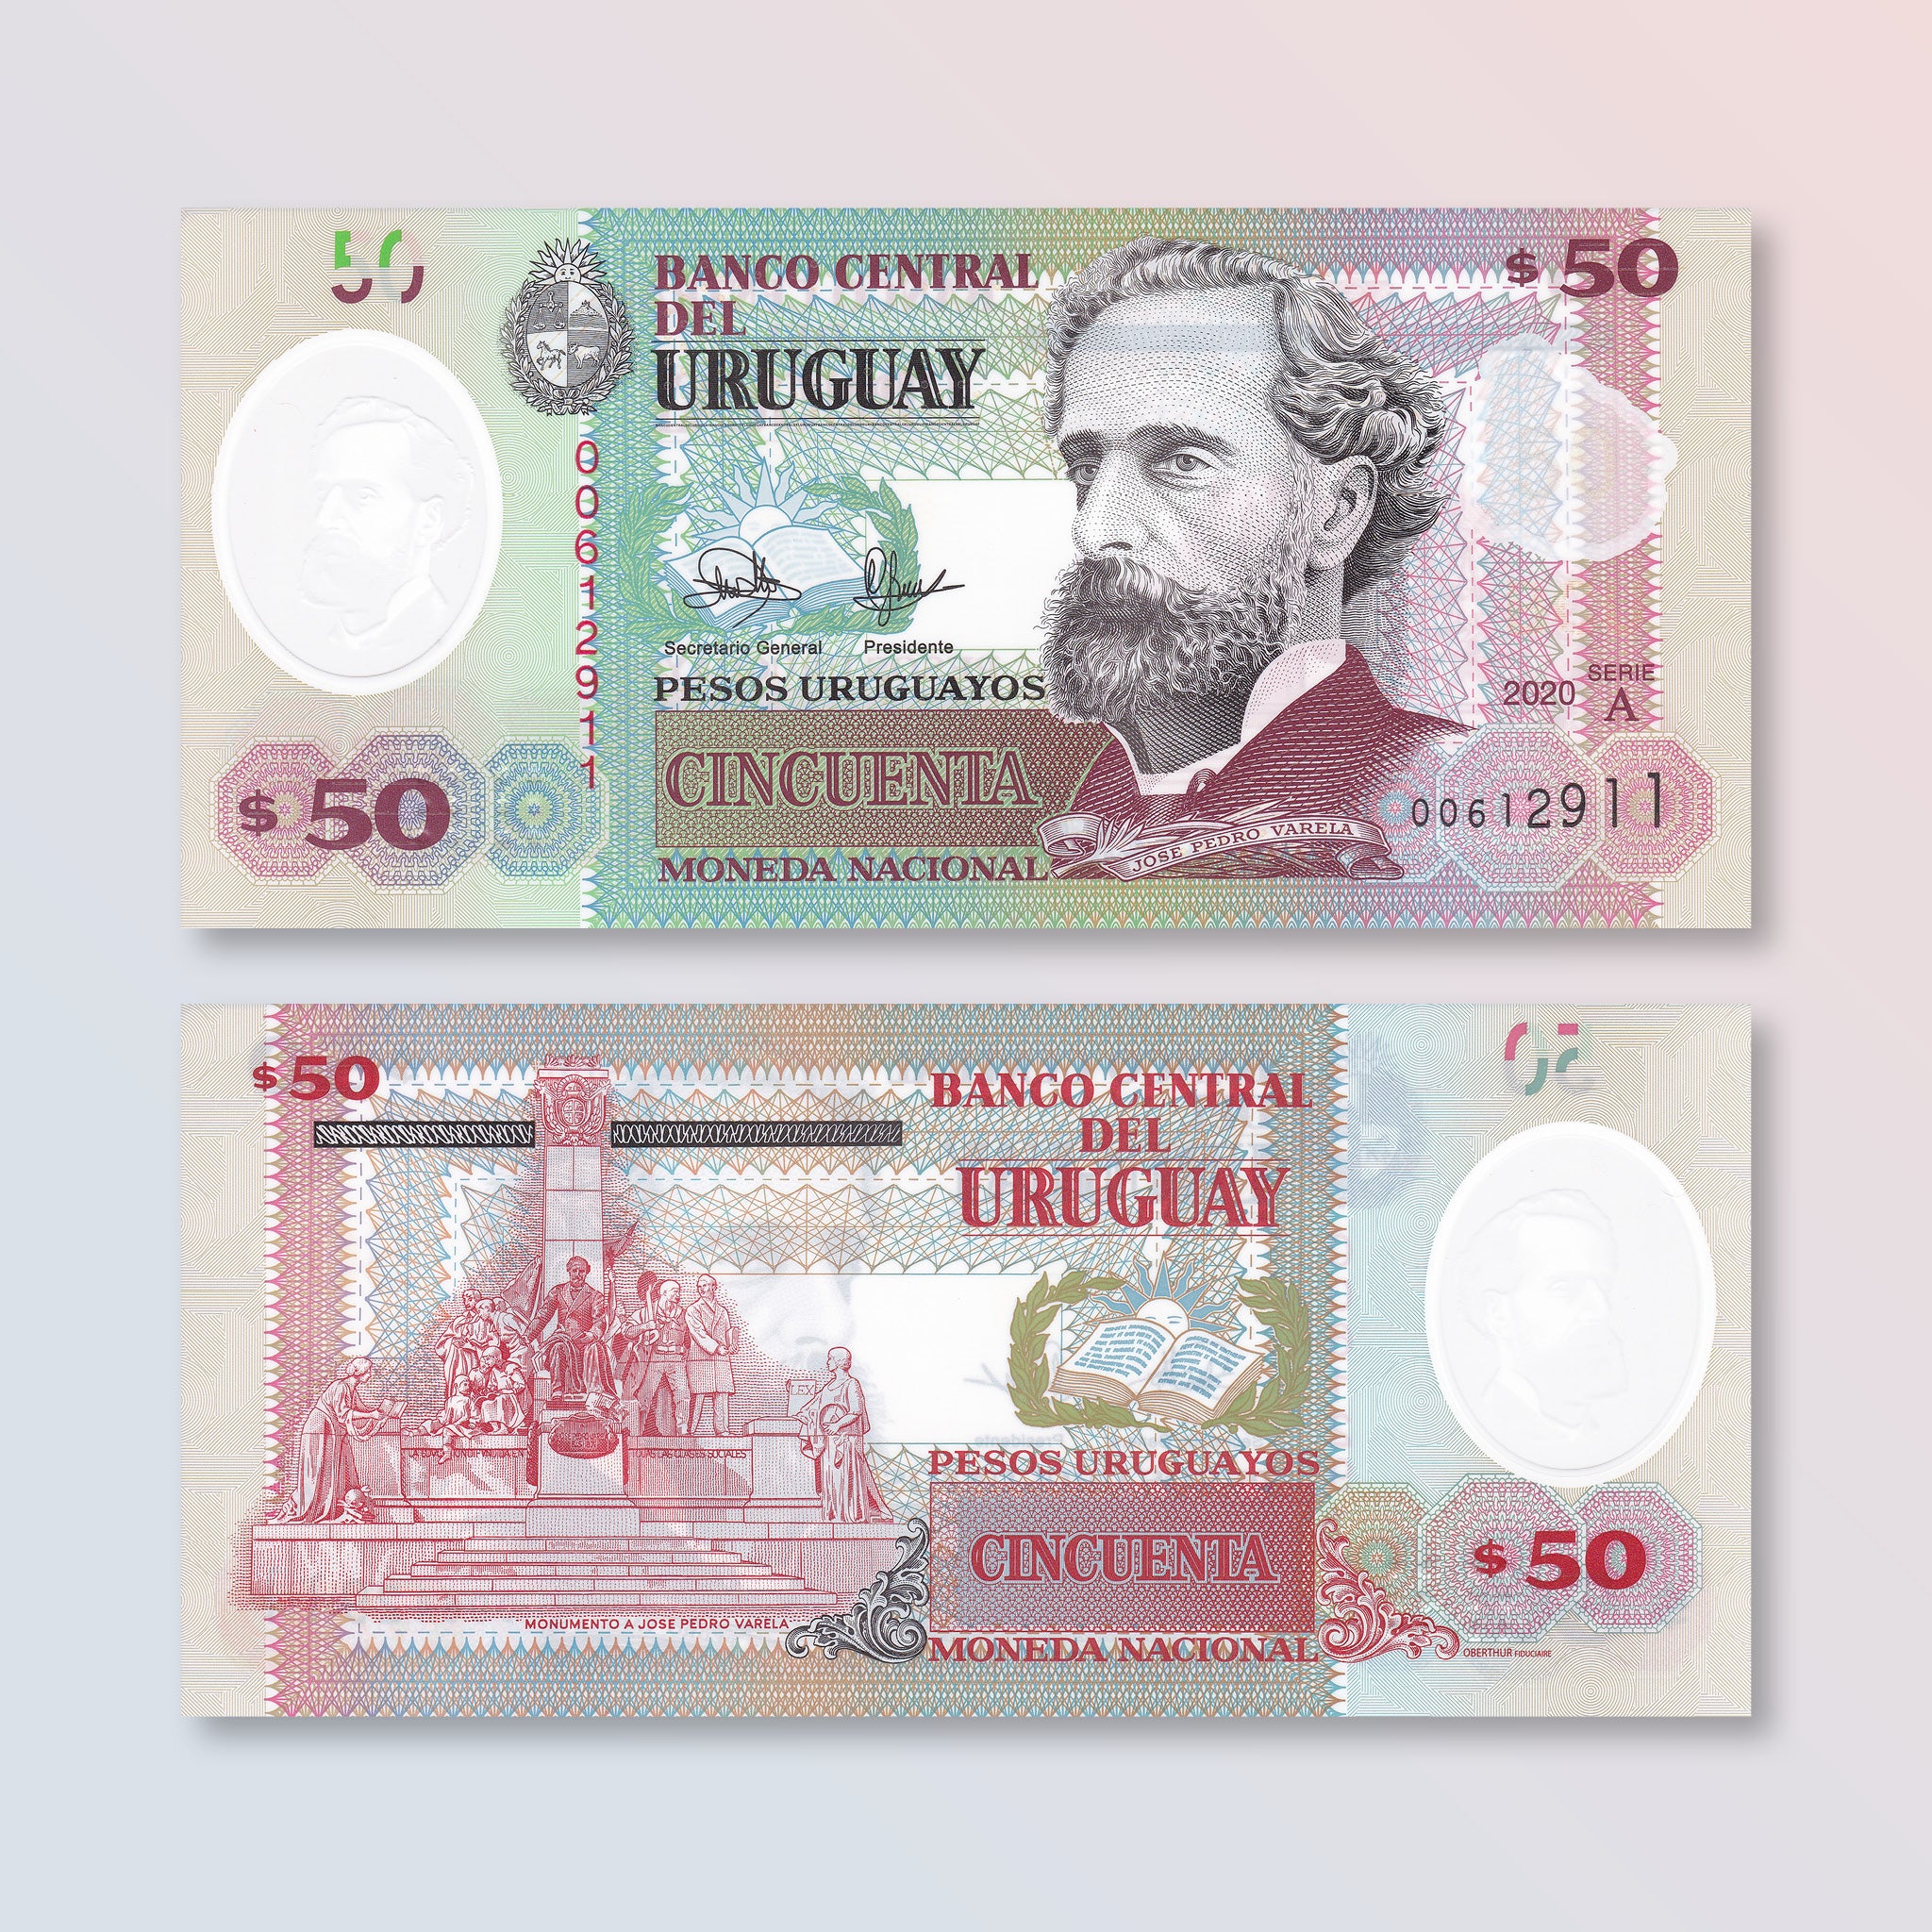 Uruguay 50 Pesos, 2020, B561a, UNC - Robert's World Money - World Banknotes